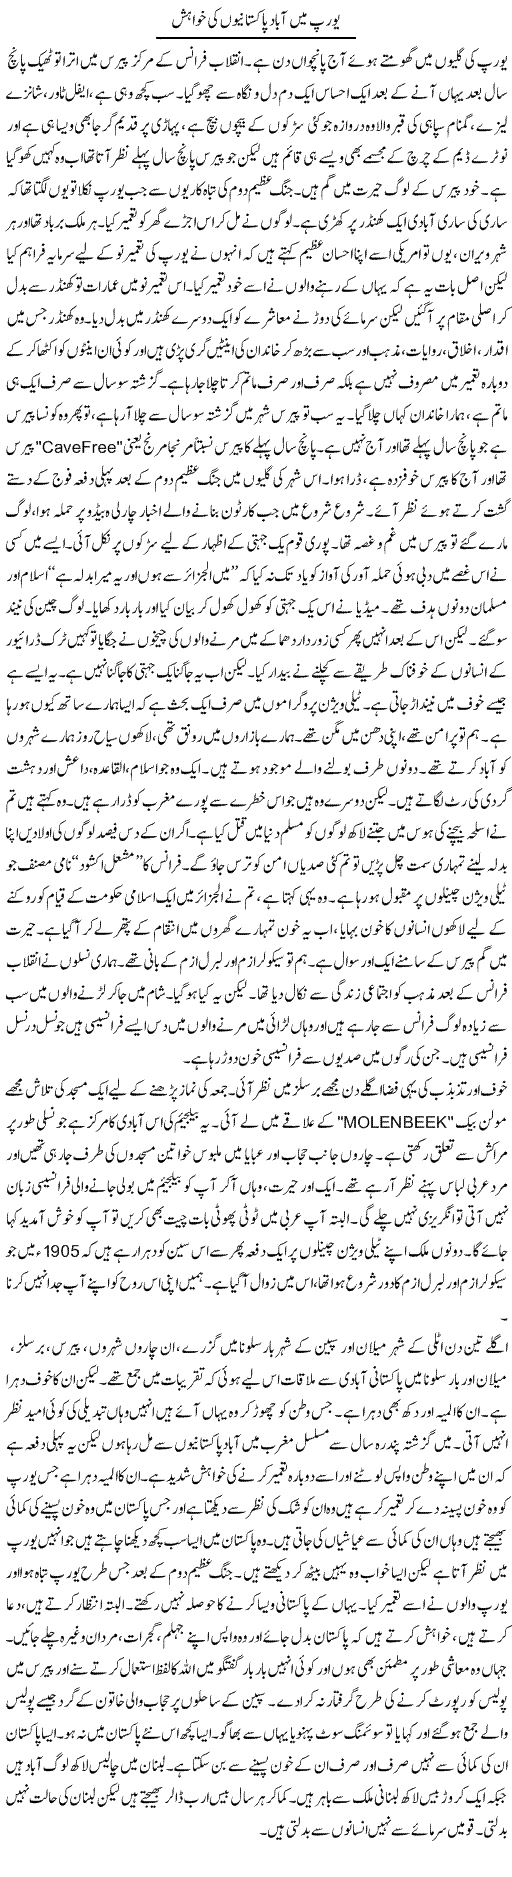 Europe mein abad Pakistanio ki khwahish | Orya Maqbool Jan | Daily Urdu Columns